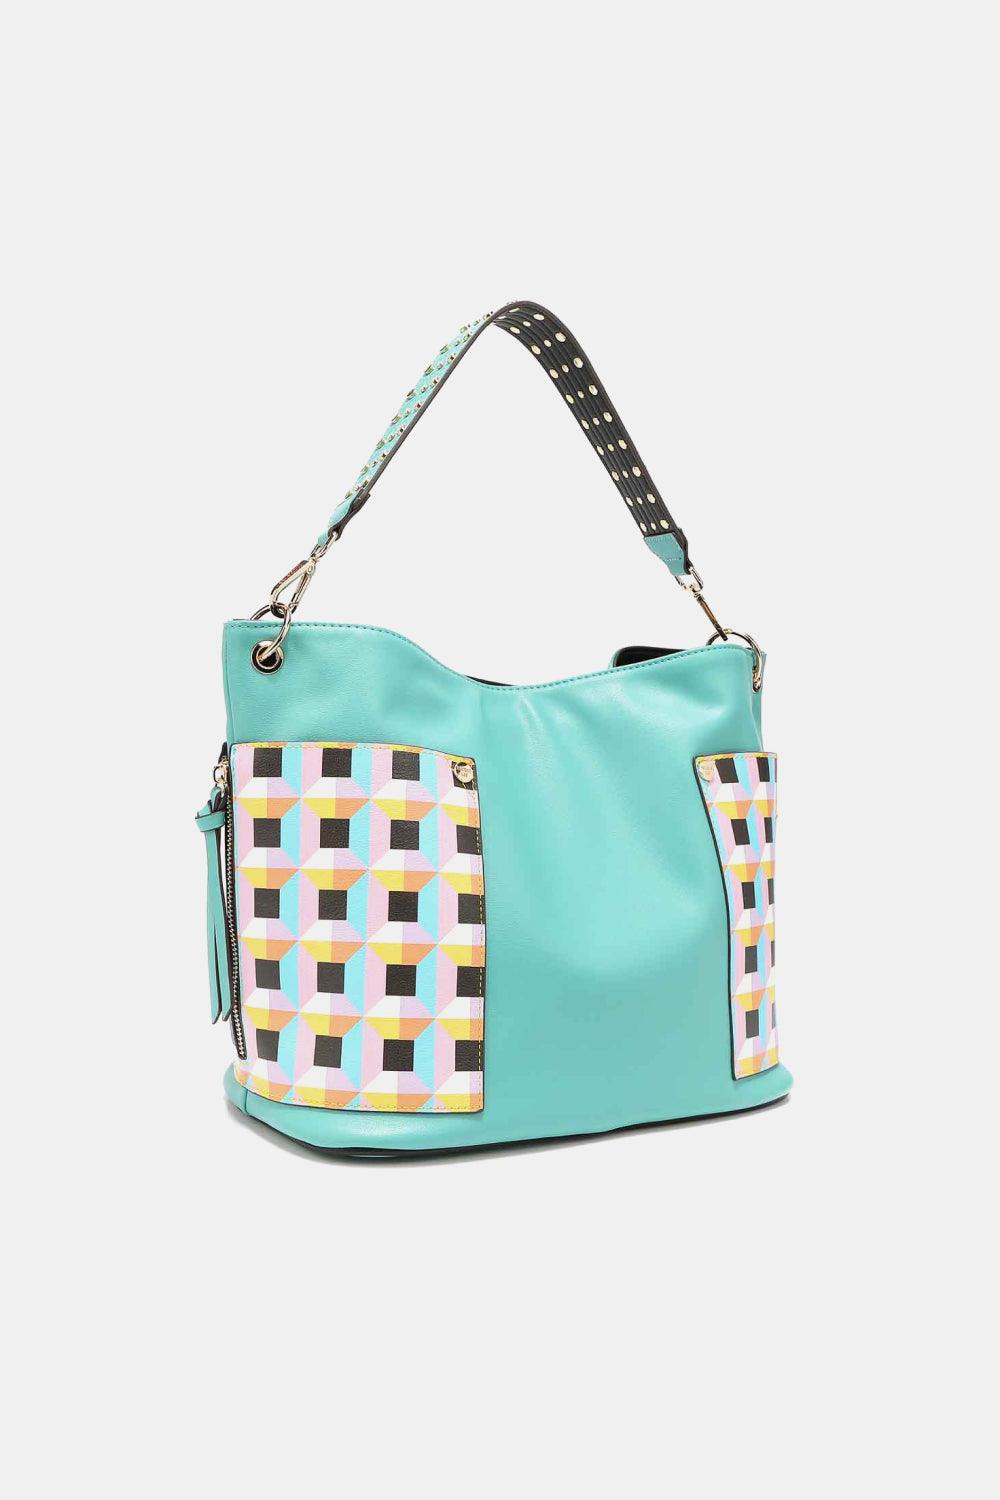 Nicole Lee USA Quihn 3-Piece Handbag Set - Lab Fashion, Home & Health